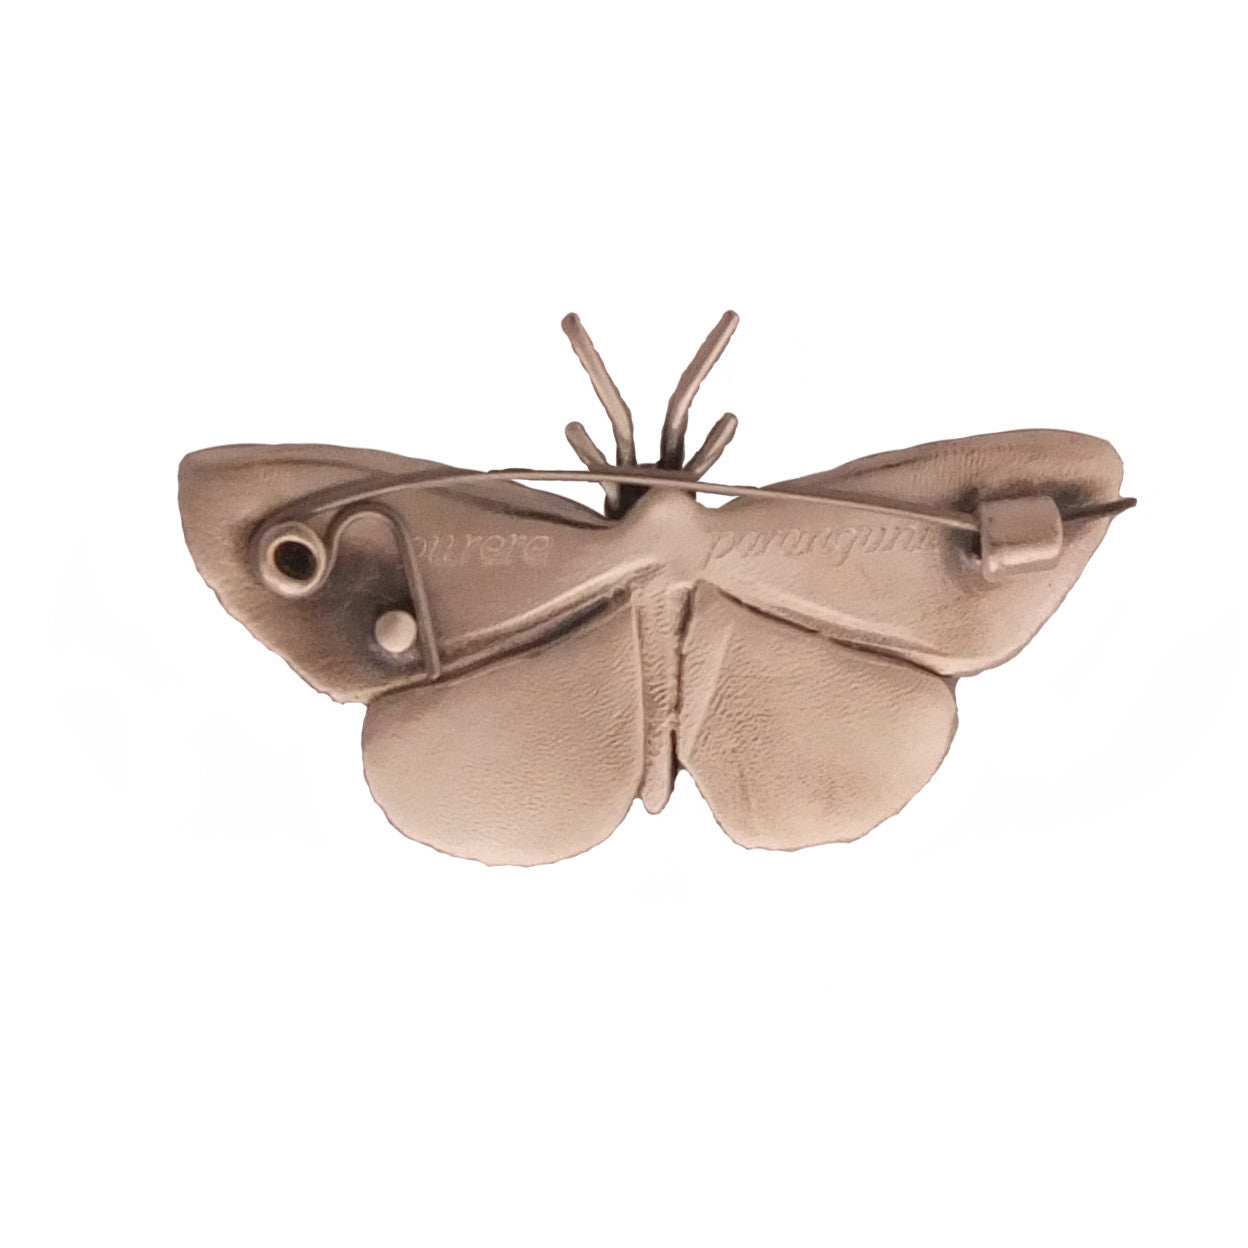 Jewellery nz | Purere Parangunu Peacock Moth Silver Brooch shows catch on reverse